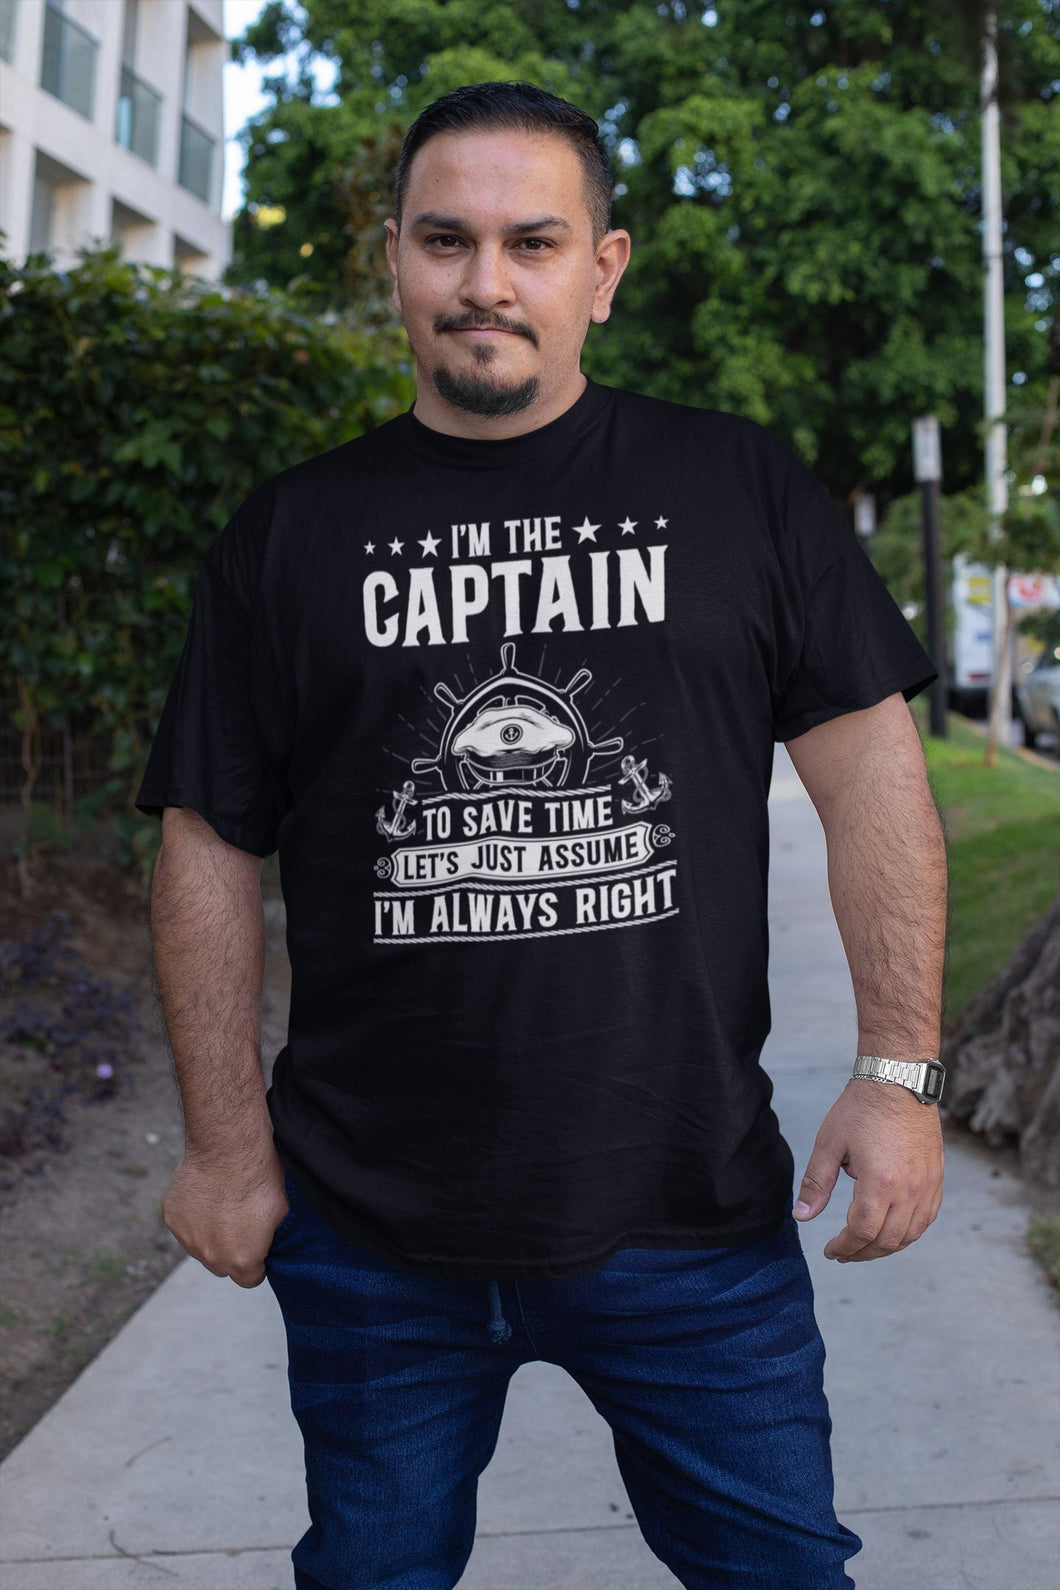 I'm The Captain Shirt, Boating Shirt, Boating Gift for Him, Boating Shirt, Boating Gift, Sailor Shirt